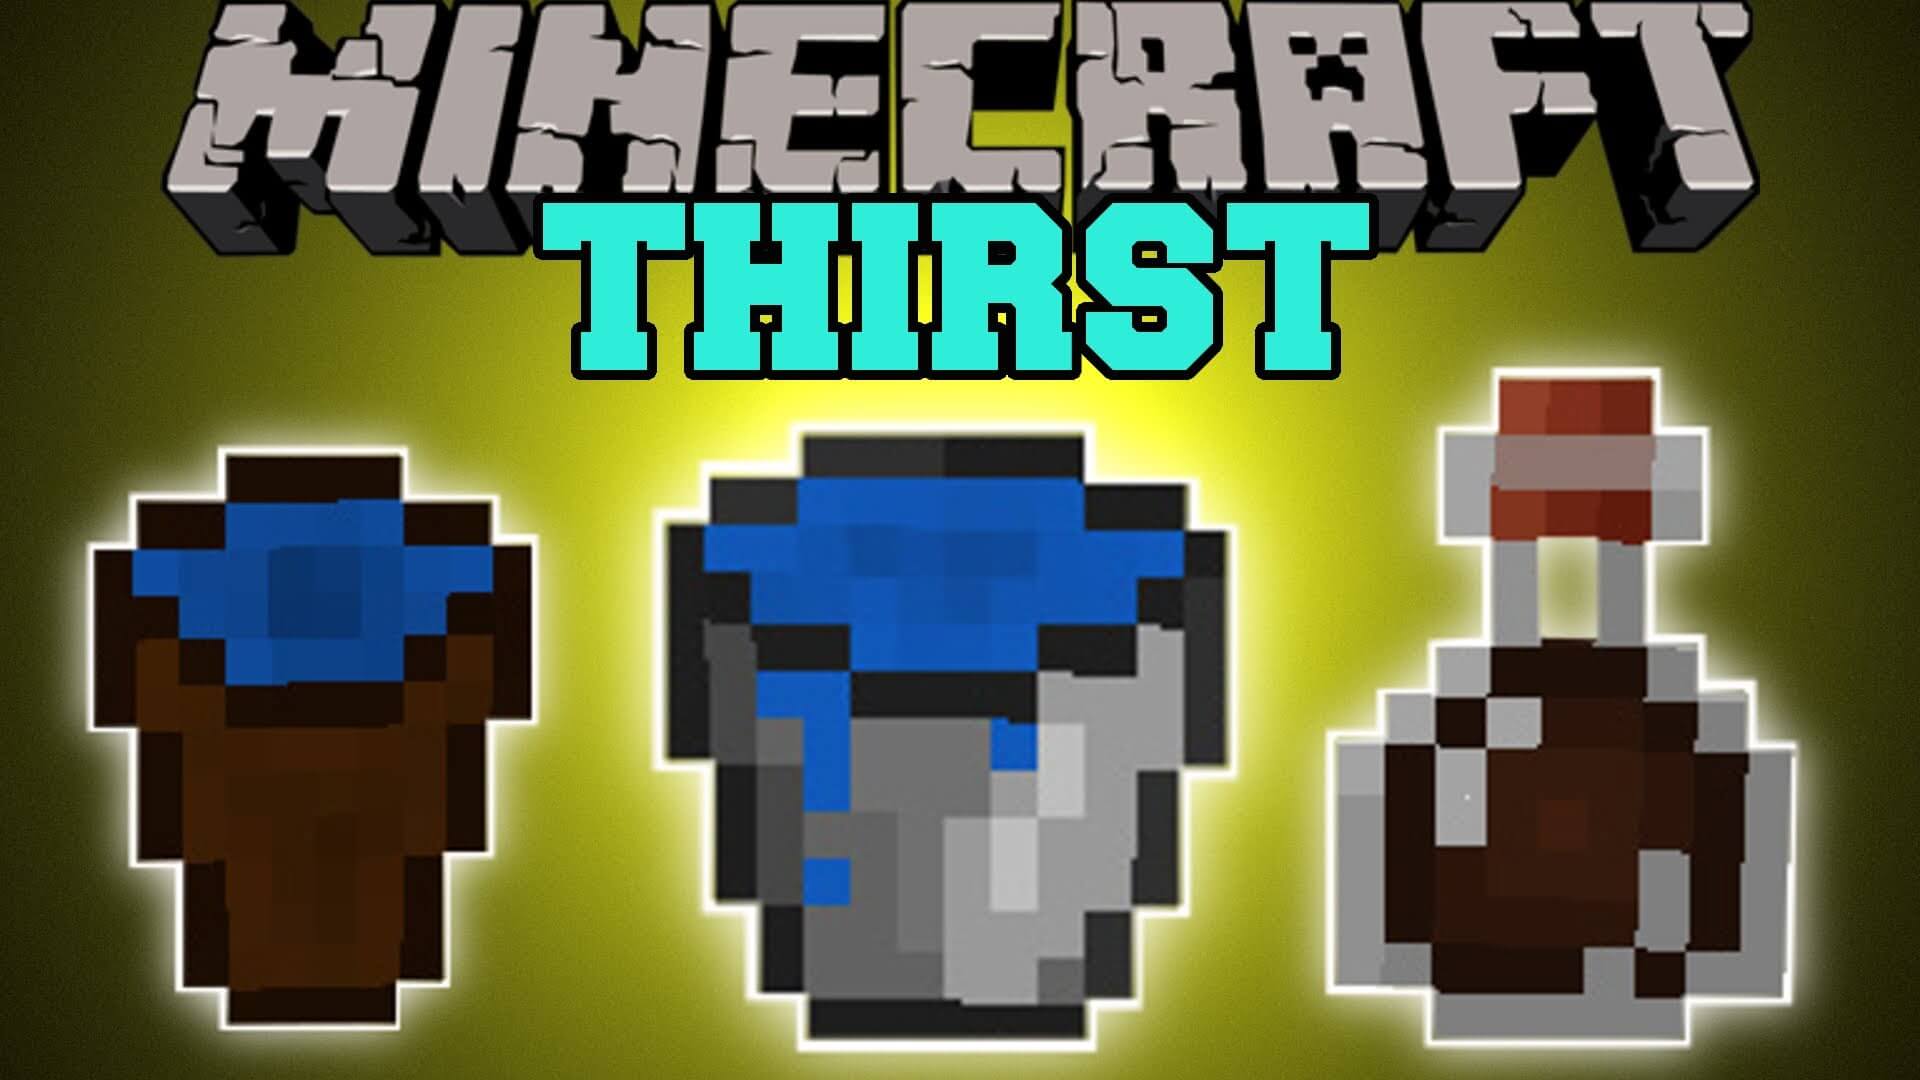 Thirsty Bottles скриншот 1